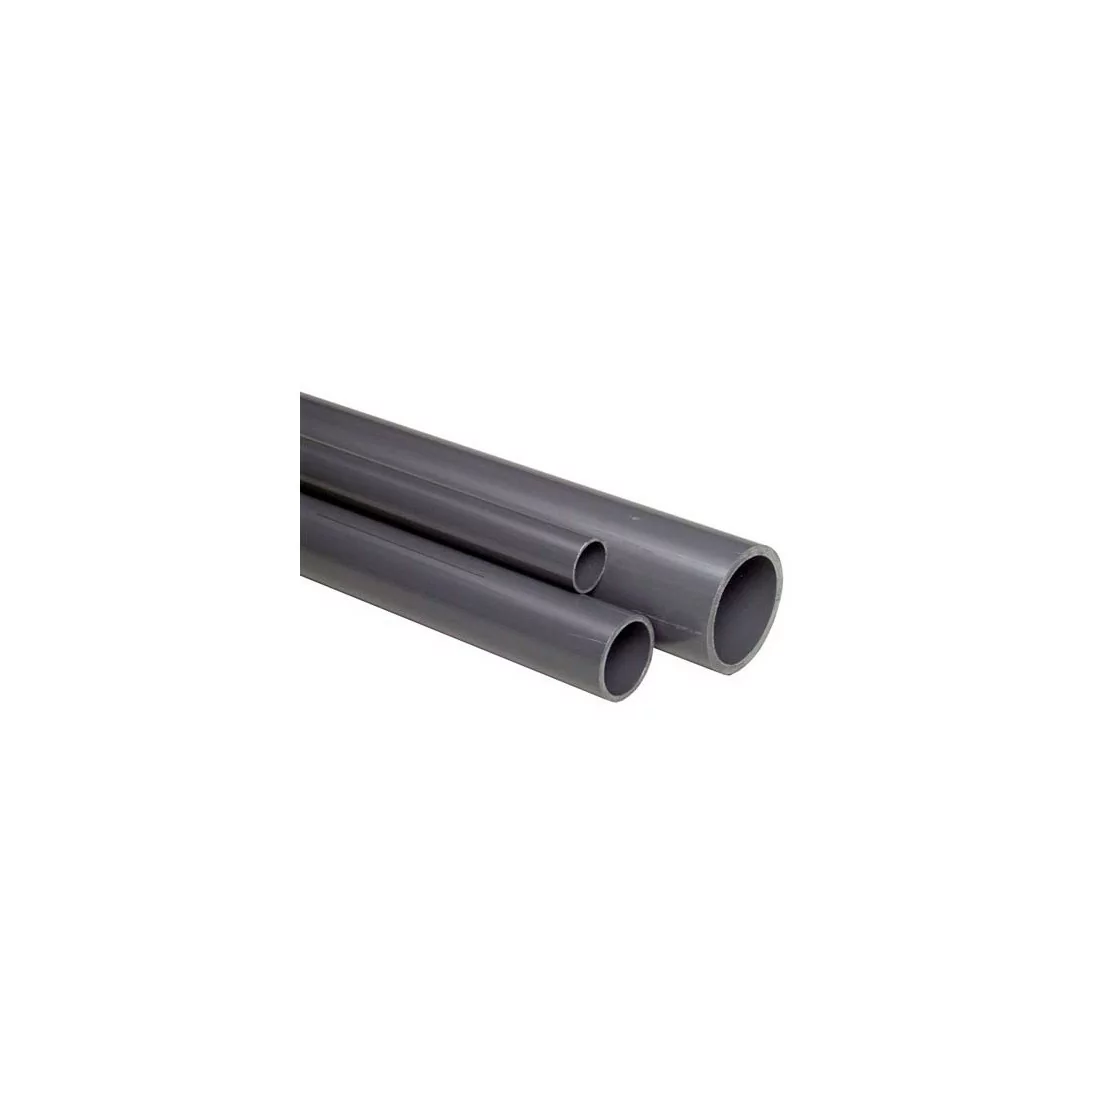 PVC pipe grey 50mm